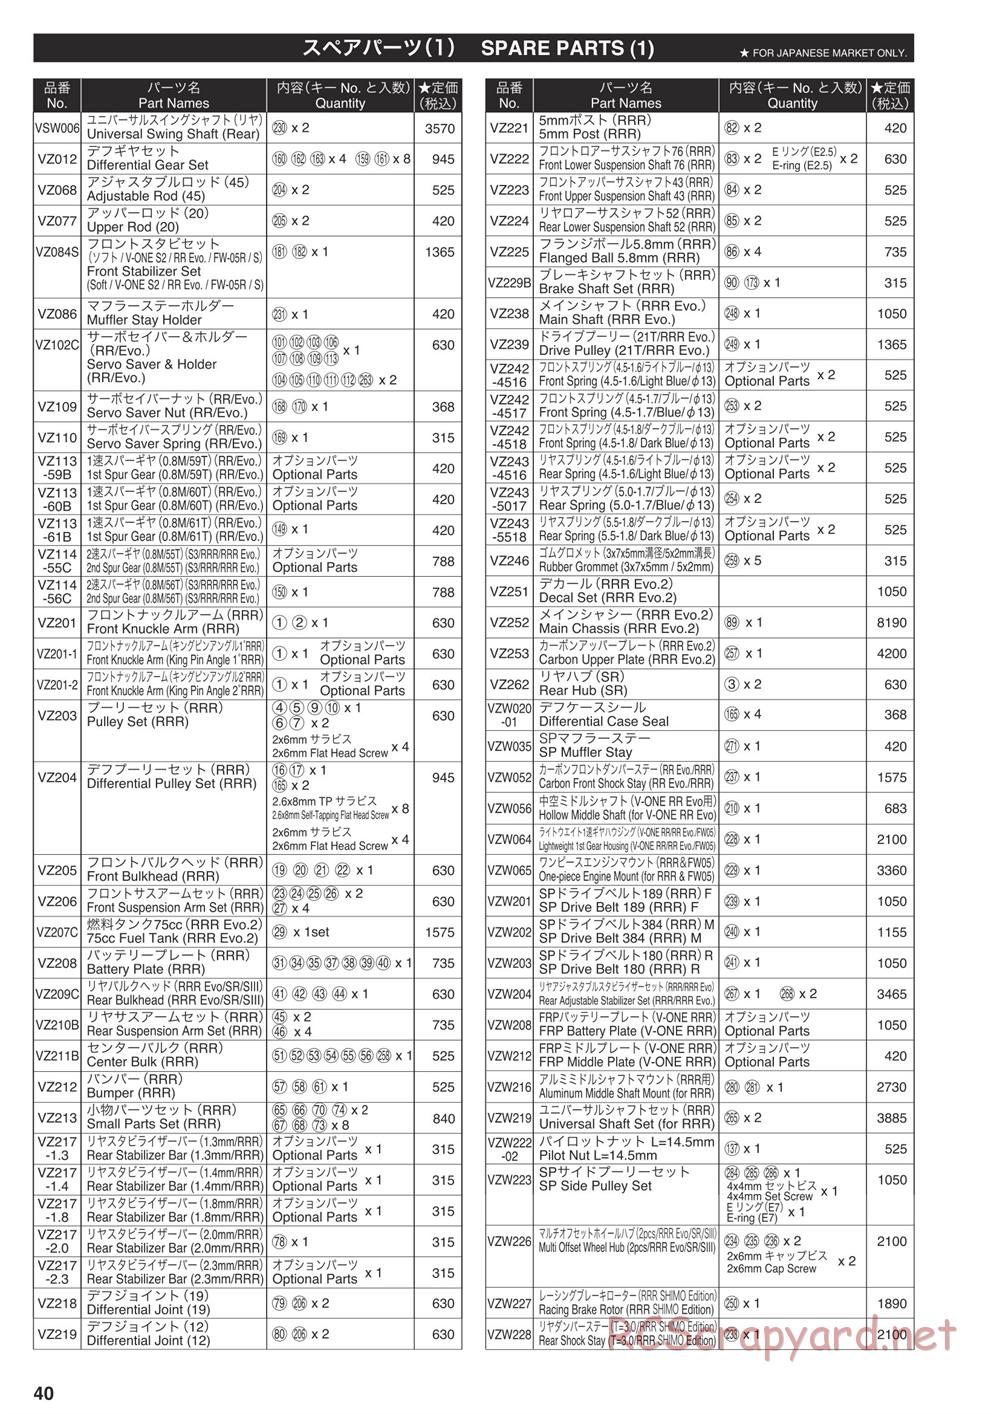 Kyosho - V-One RRR Shimo - Parts List - Page 1